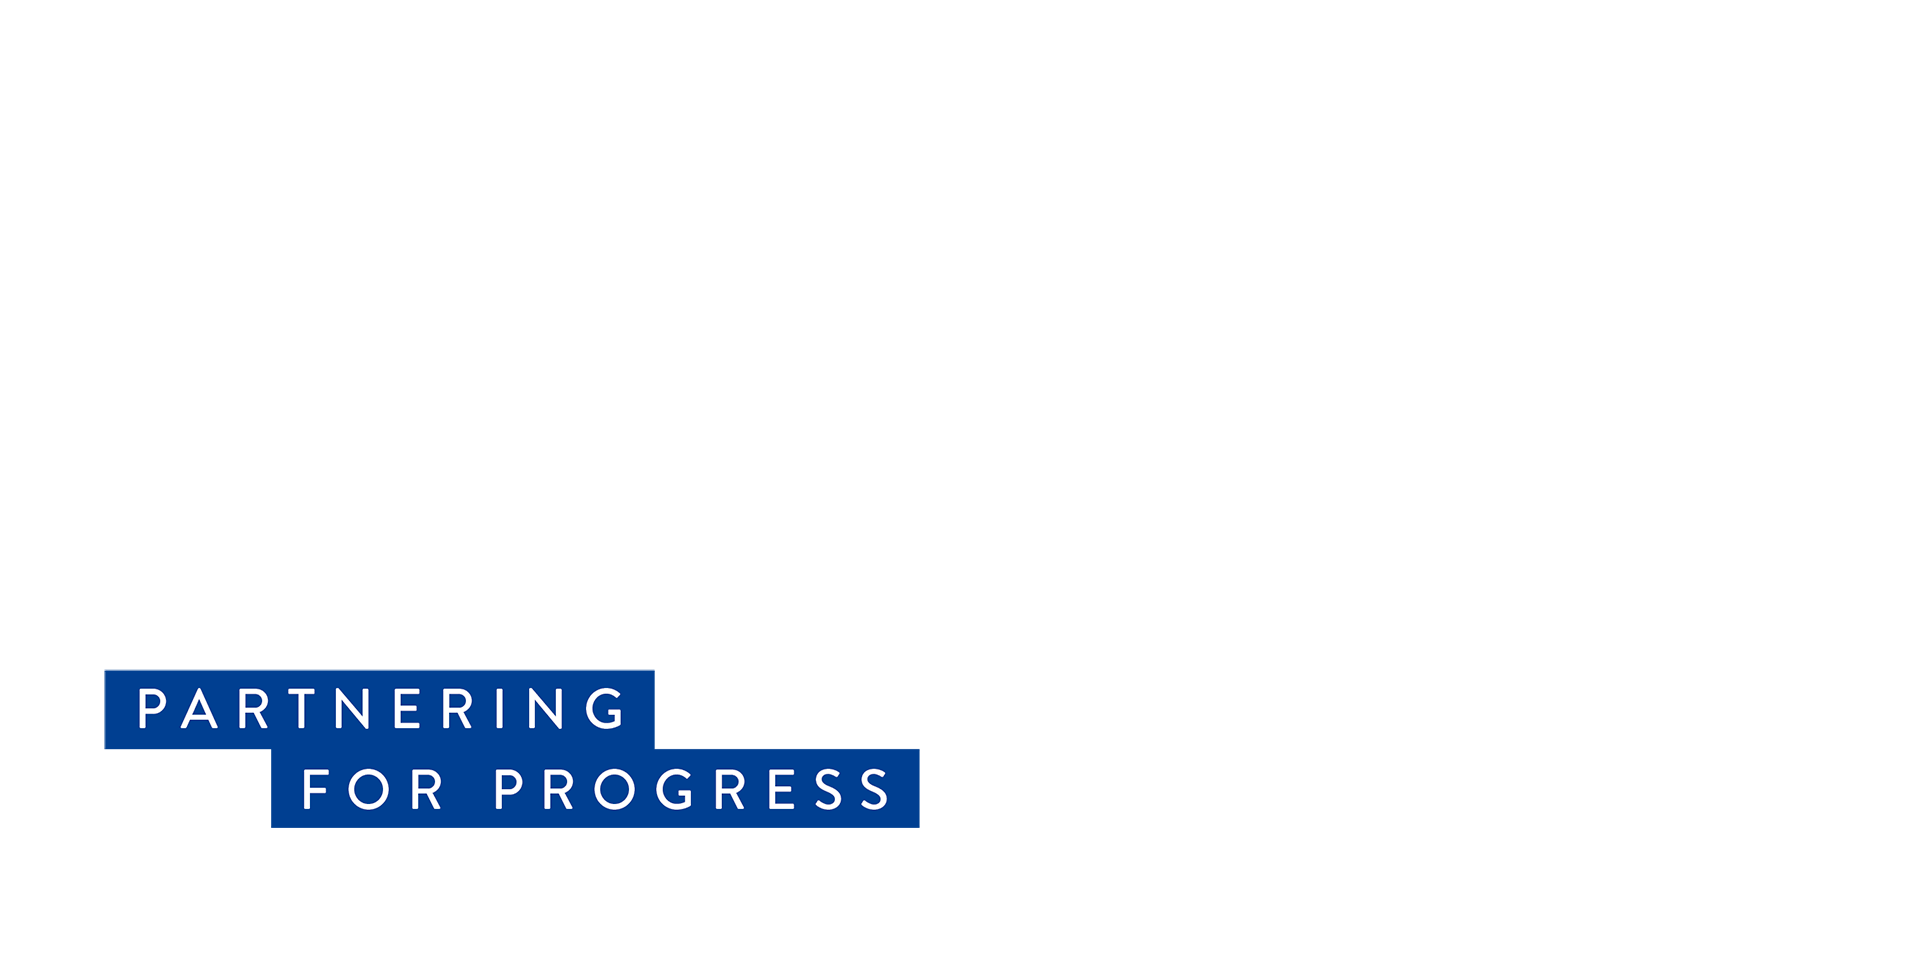 image-title-partnering_for_progress